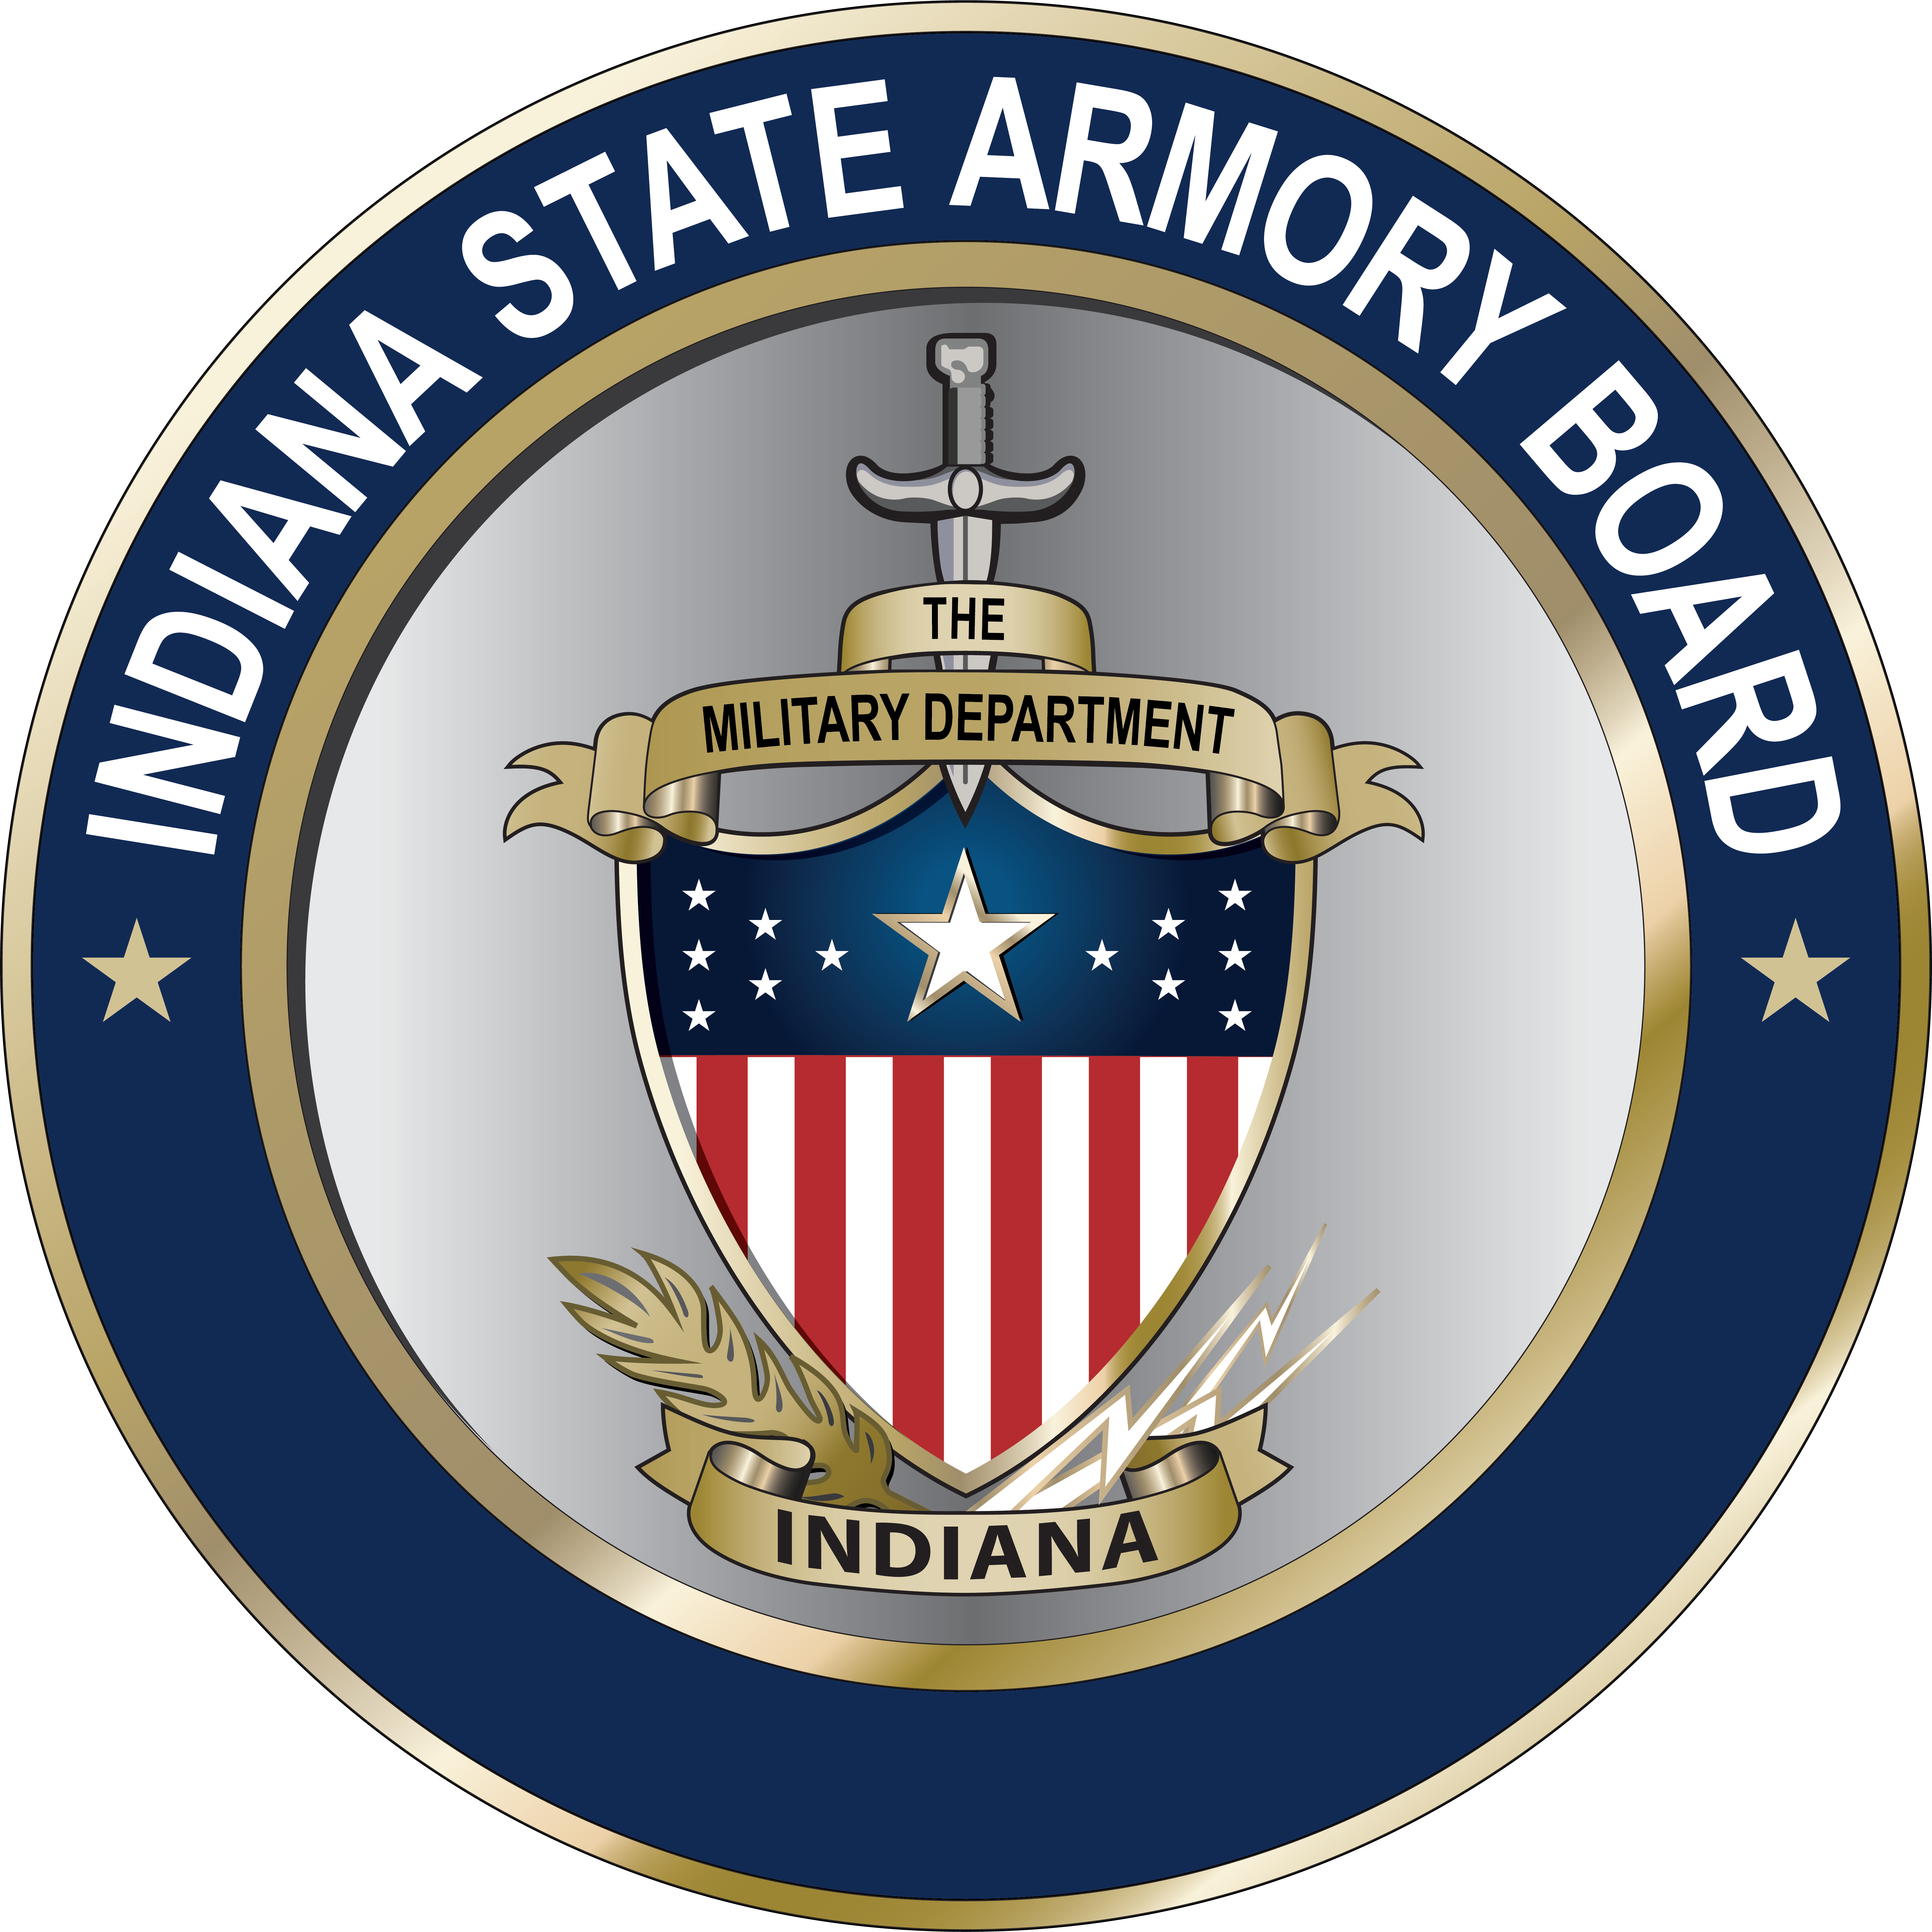 State Armory Board Emblem